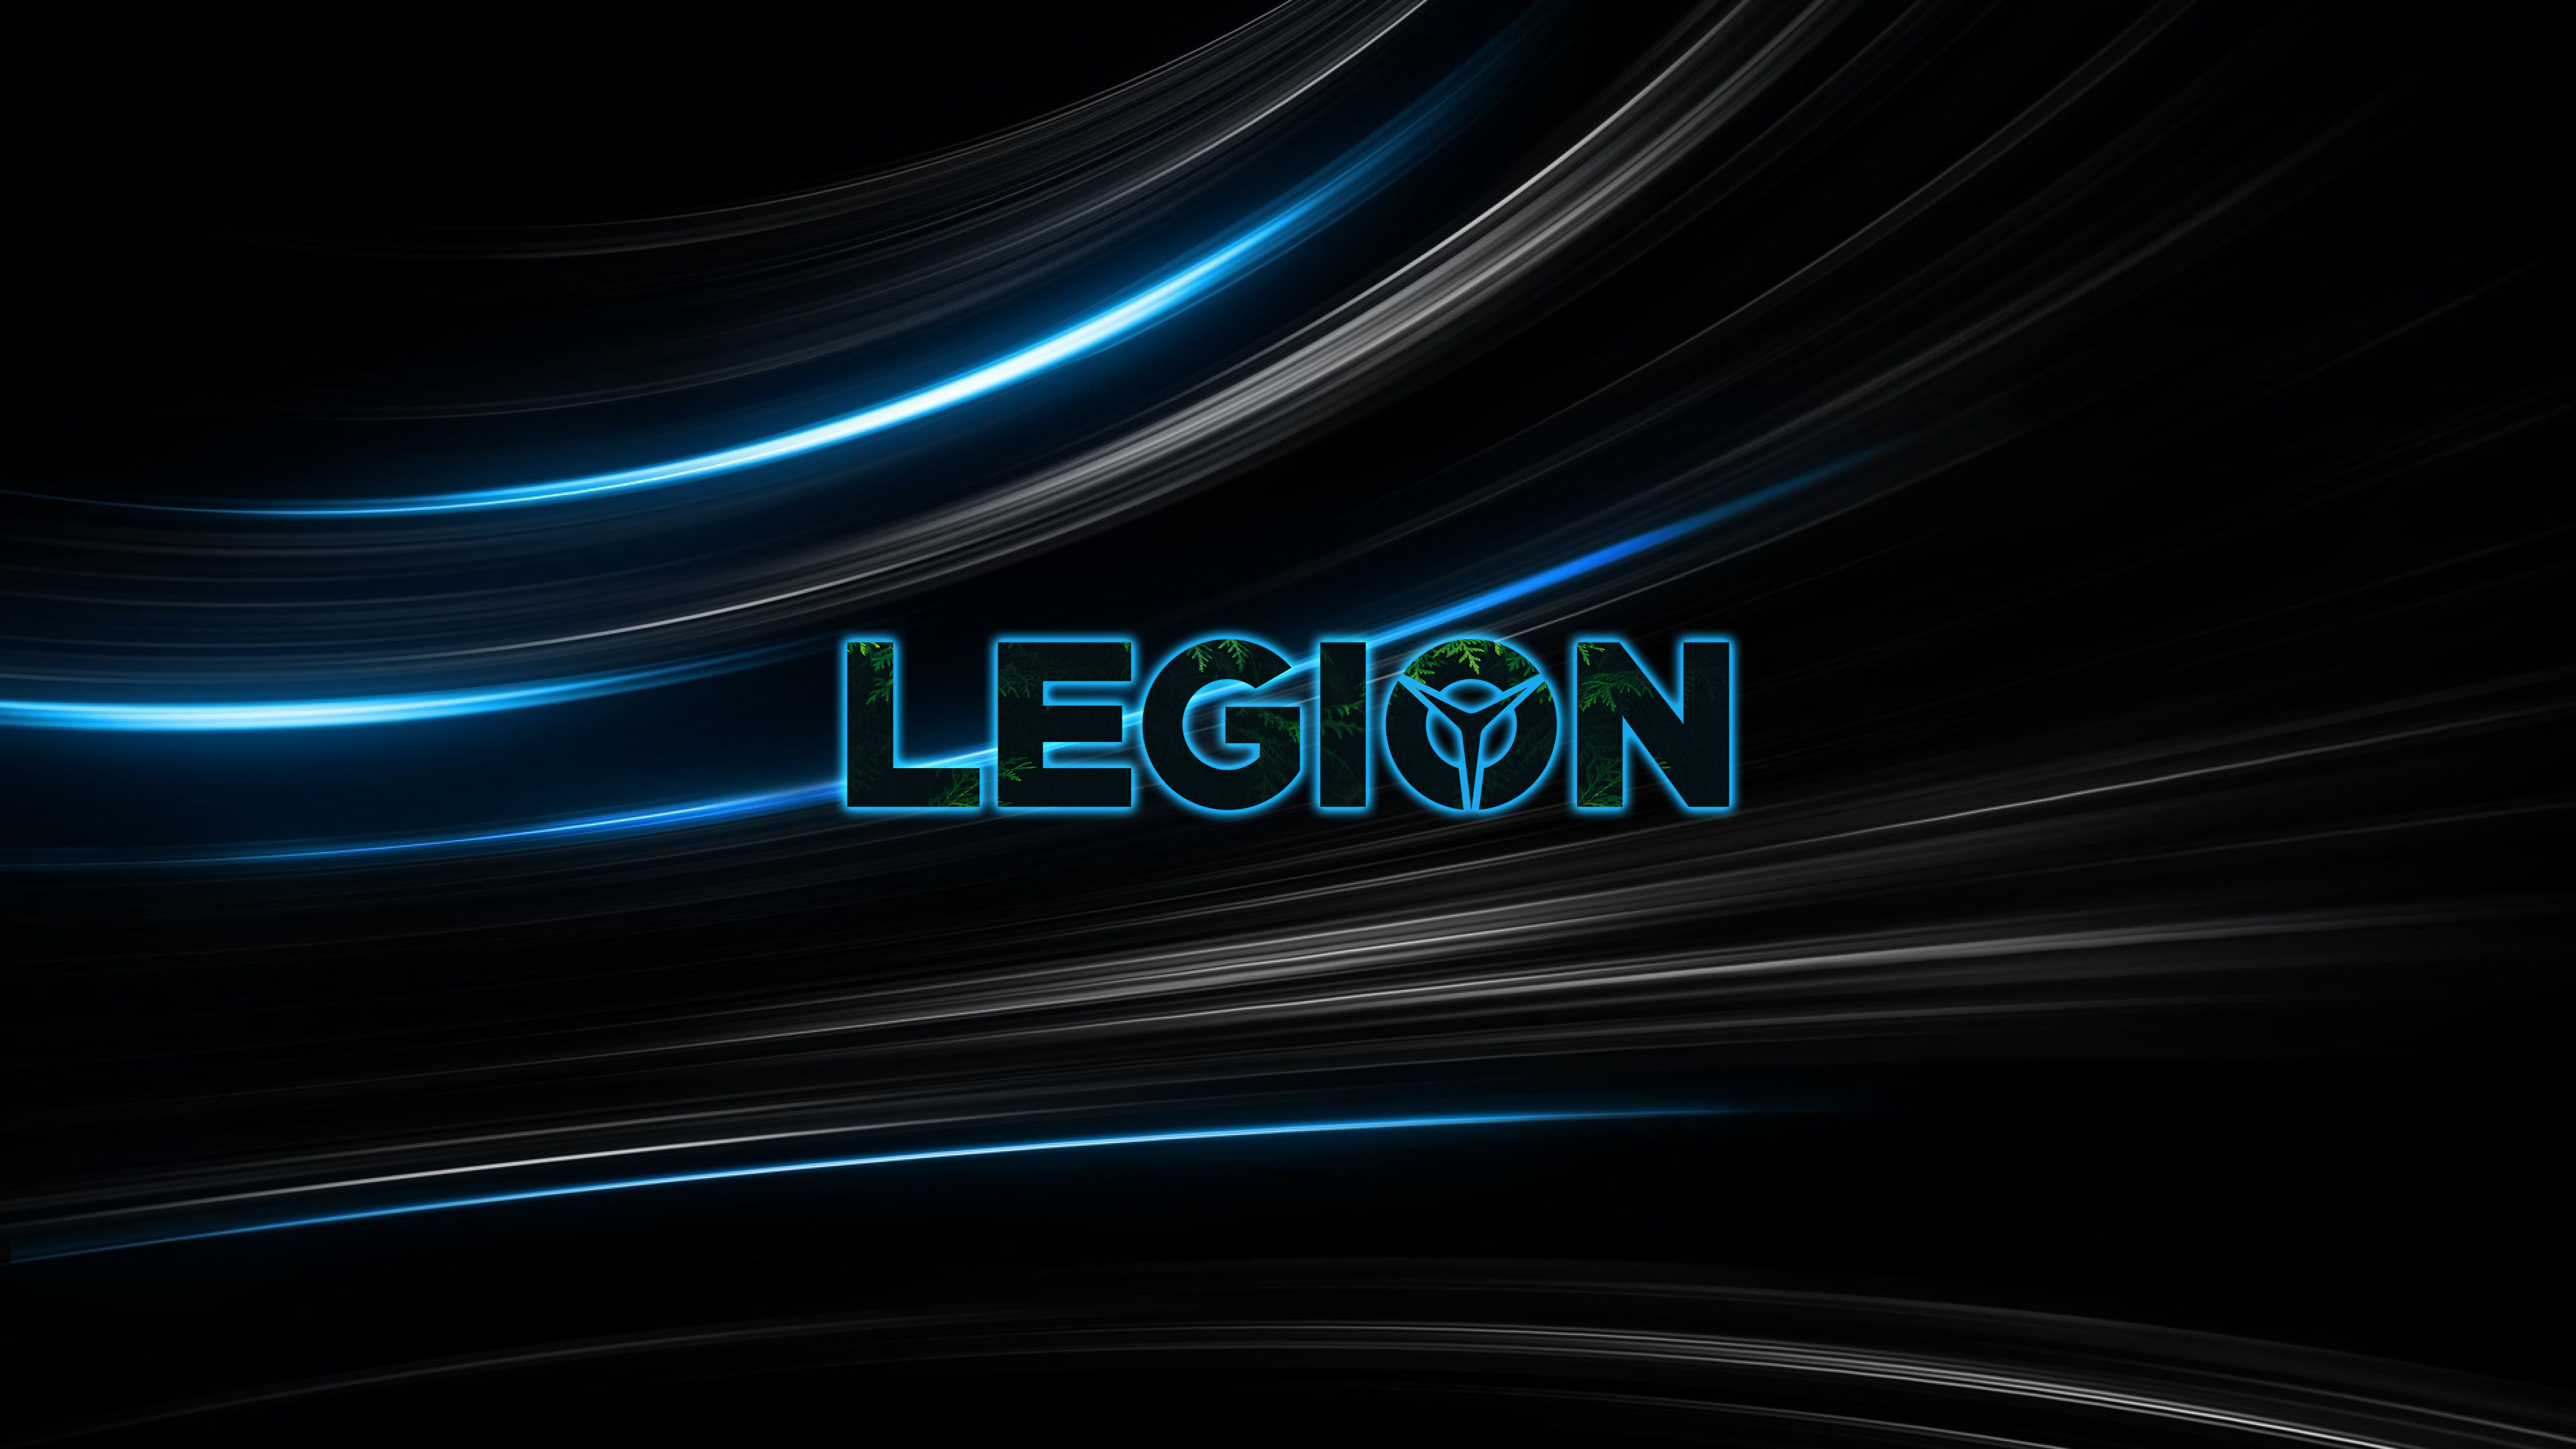 Legion 5 Pro wallpaper, Ultimate gaming experience, English community, Lenovo enthusiasts, 3840x2160 4K Desktop